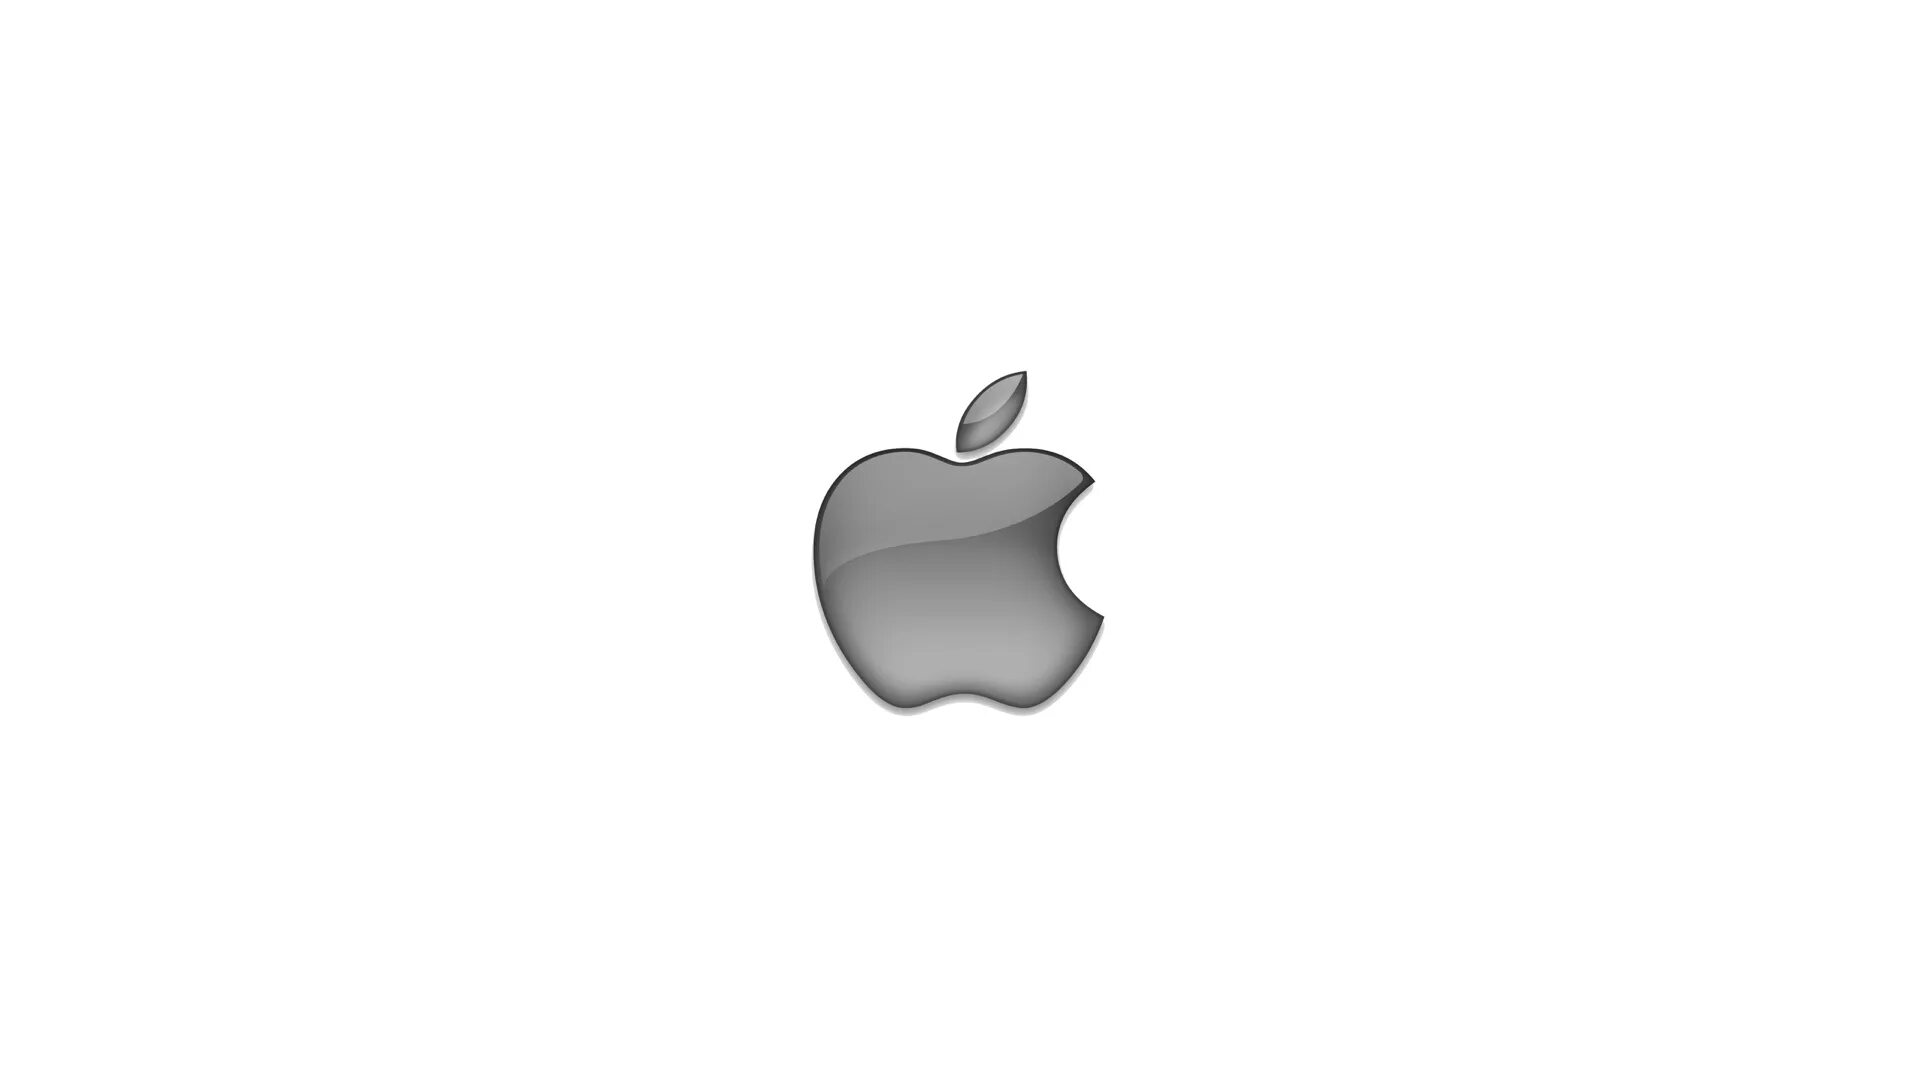 Значок эпл на белом фоне. Значок Эппл без фона. Логотип айфона. Маленький логотип Apple. Значок айфона скопировать